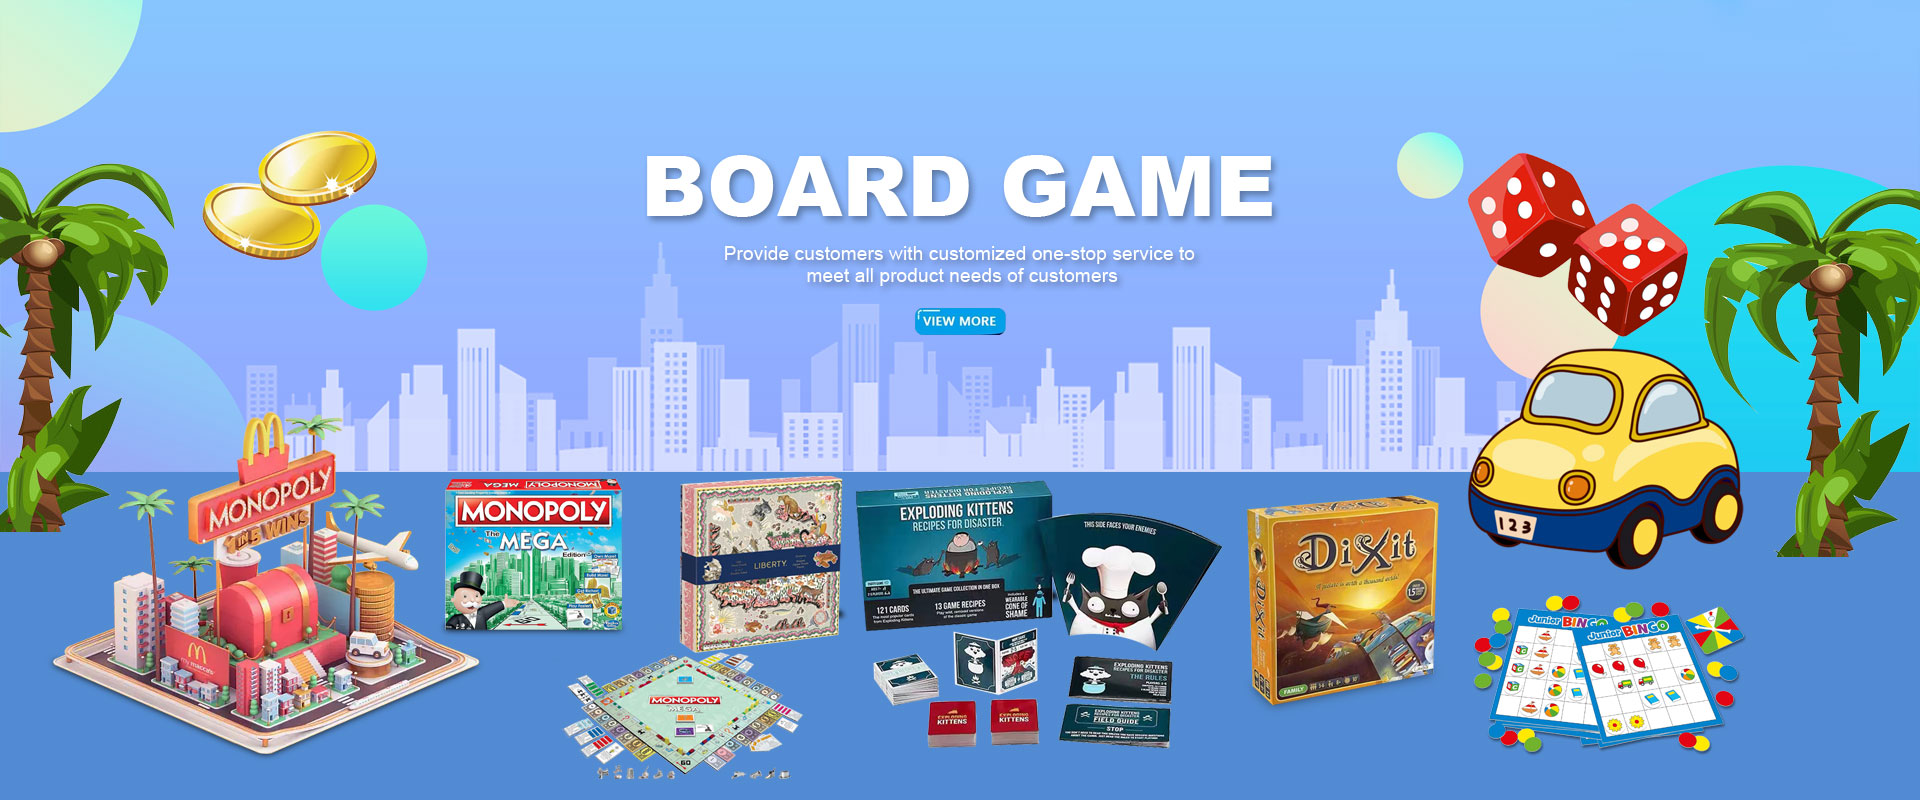 Board Game Supplier